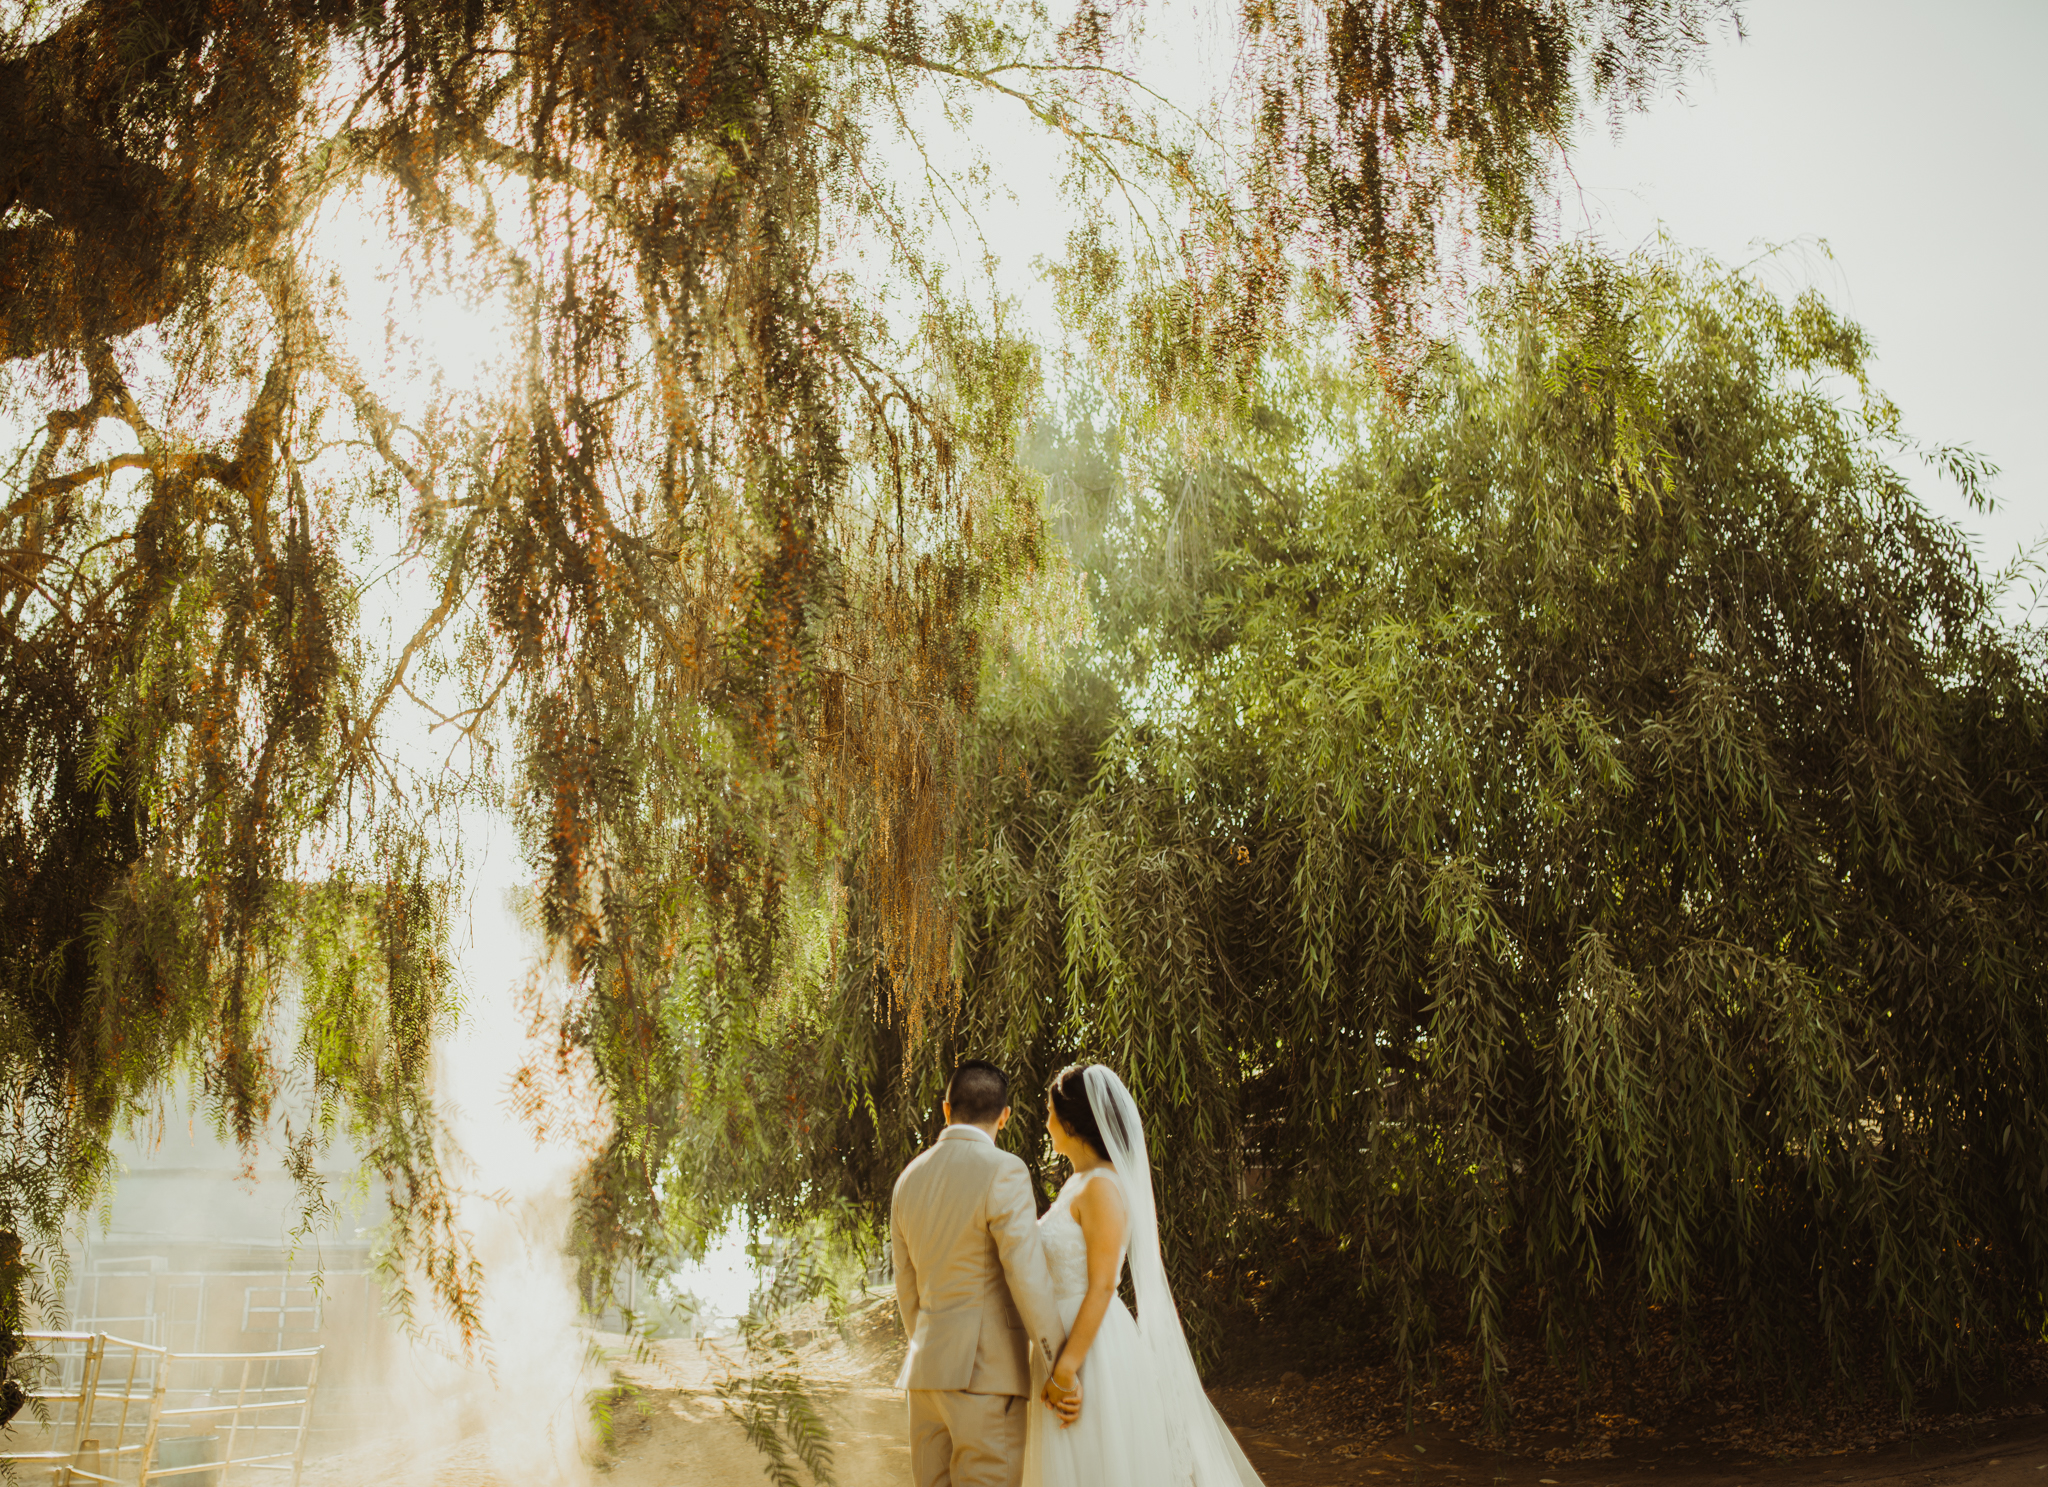 ©Isaiah + Taylor Photography - Brendan + Stefana, Quail Haven Farm Wedding, Vista-120.jpg